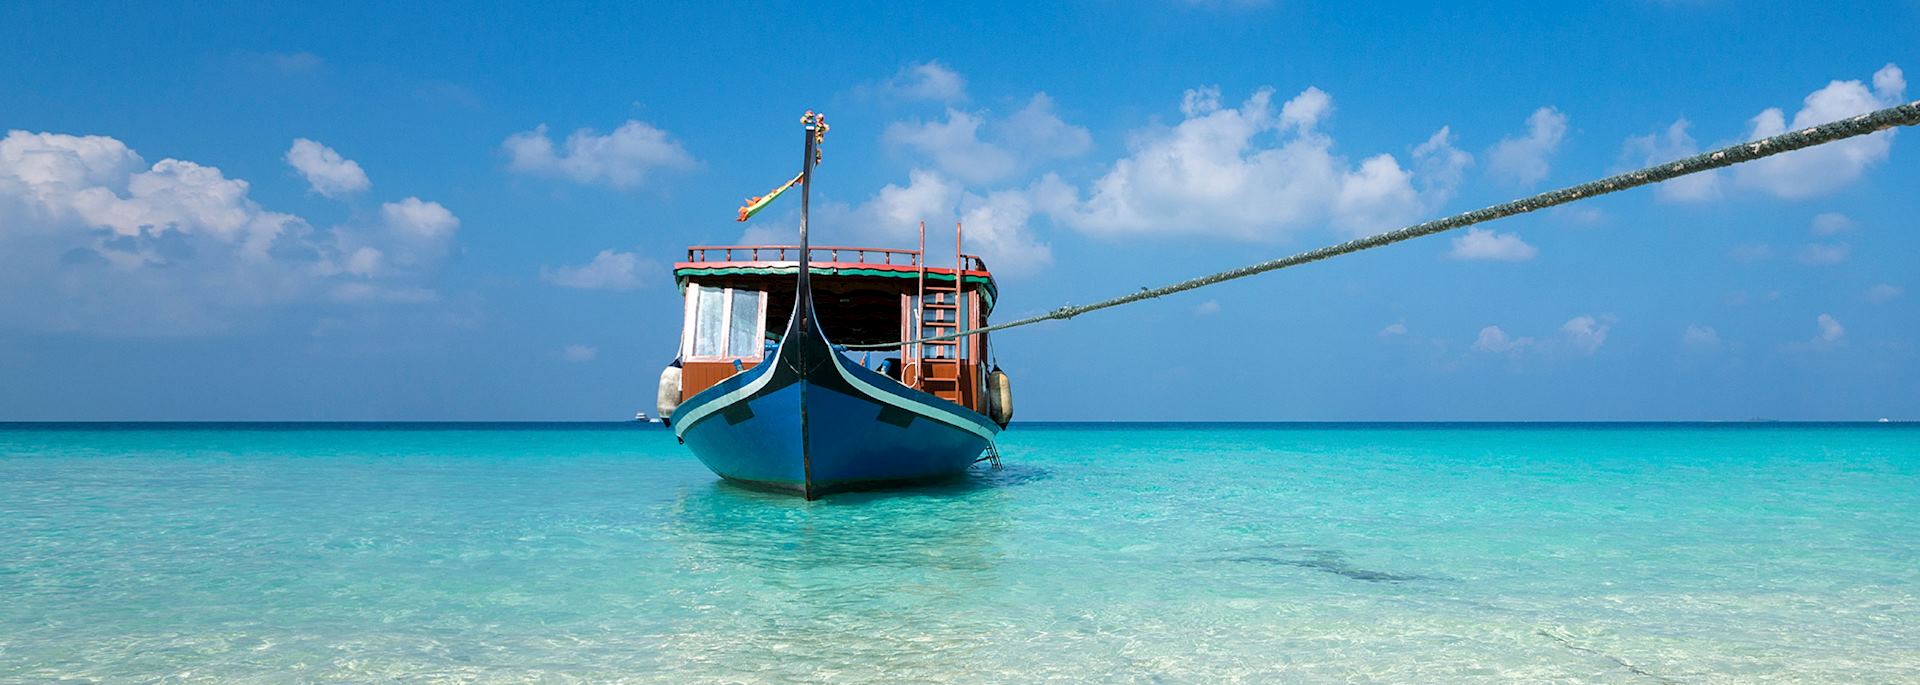 Fishing boat, the Maldives